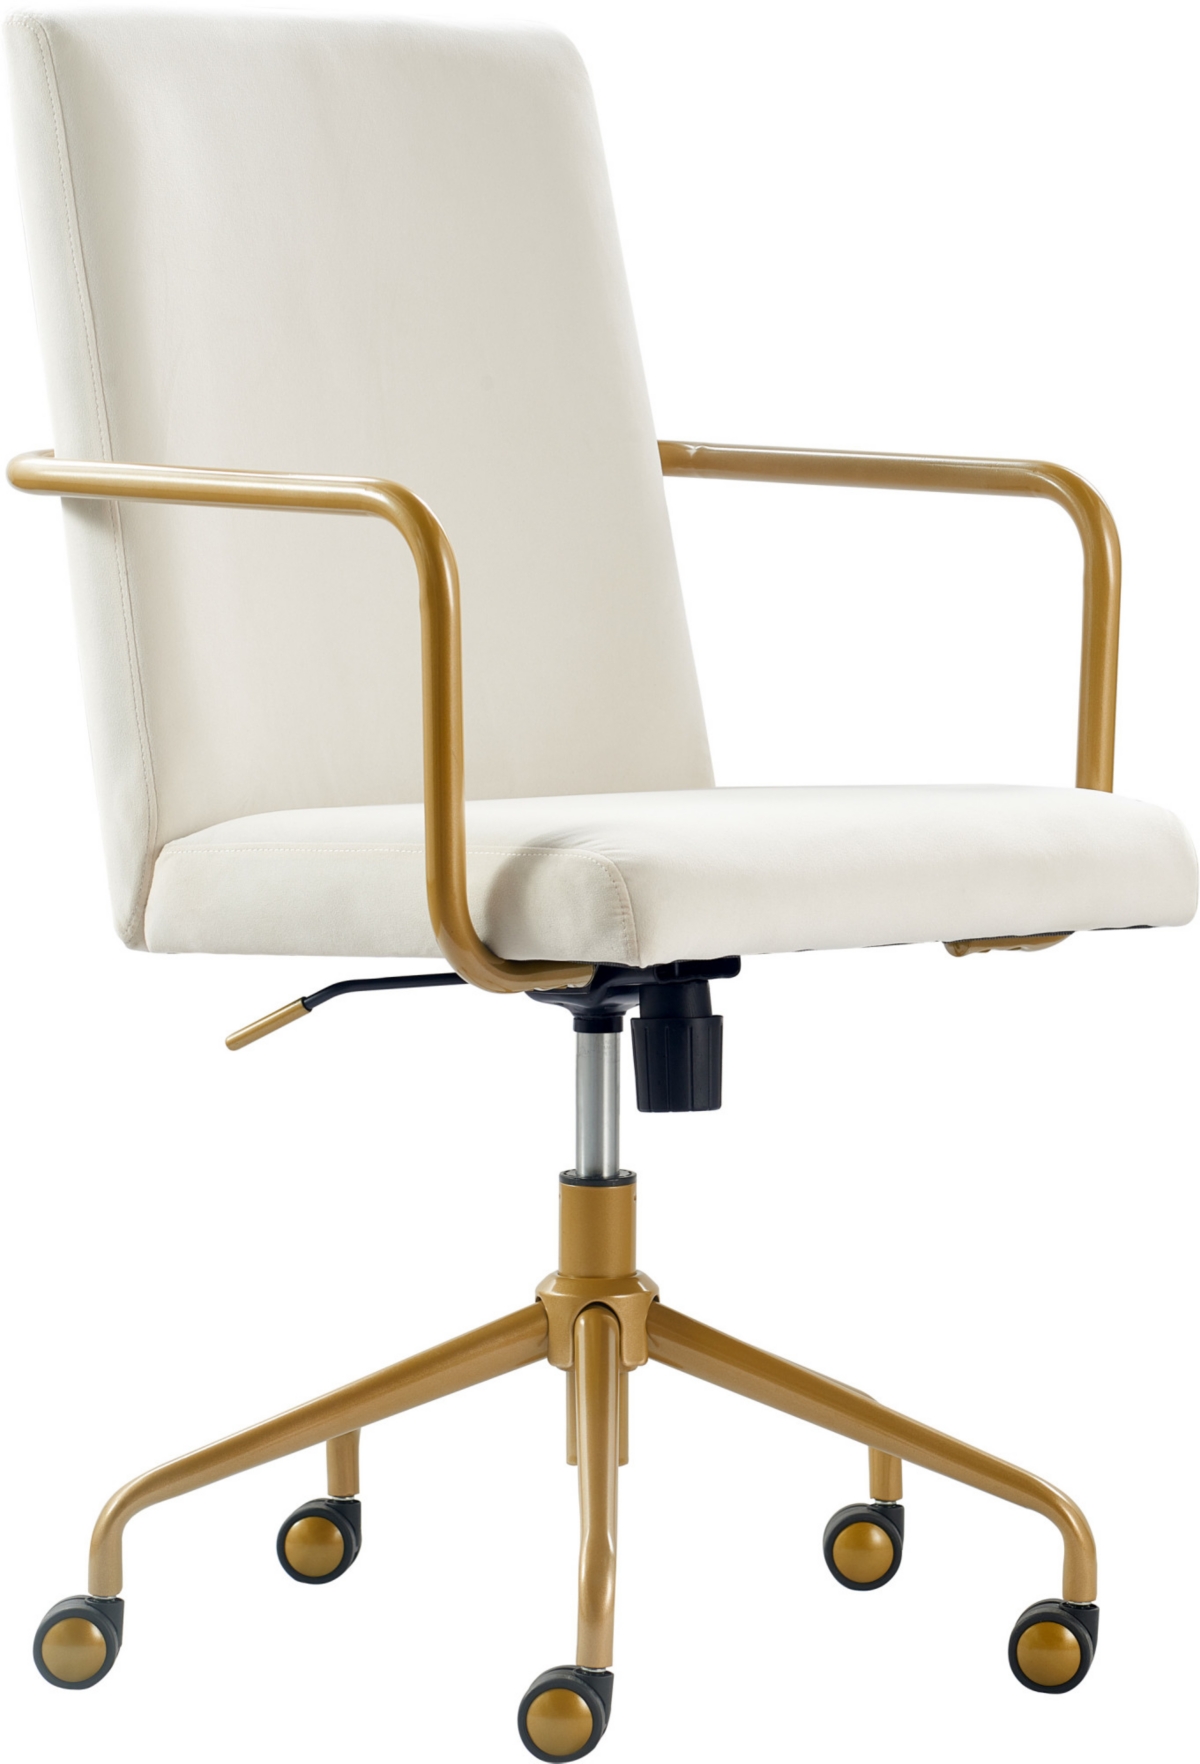 Elle Decor Giselle Office Chair In Cream